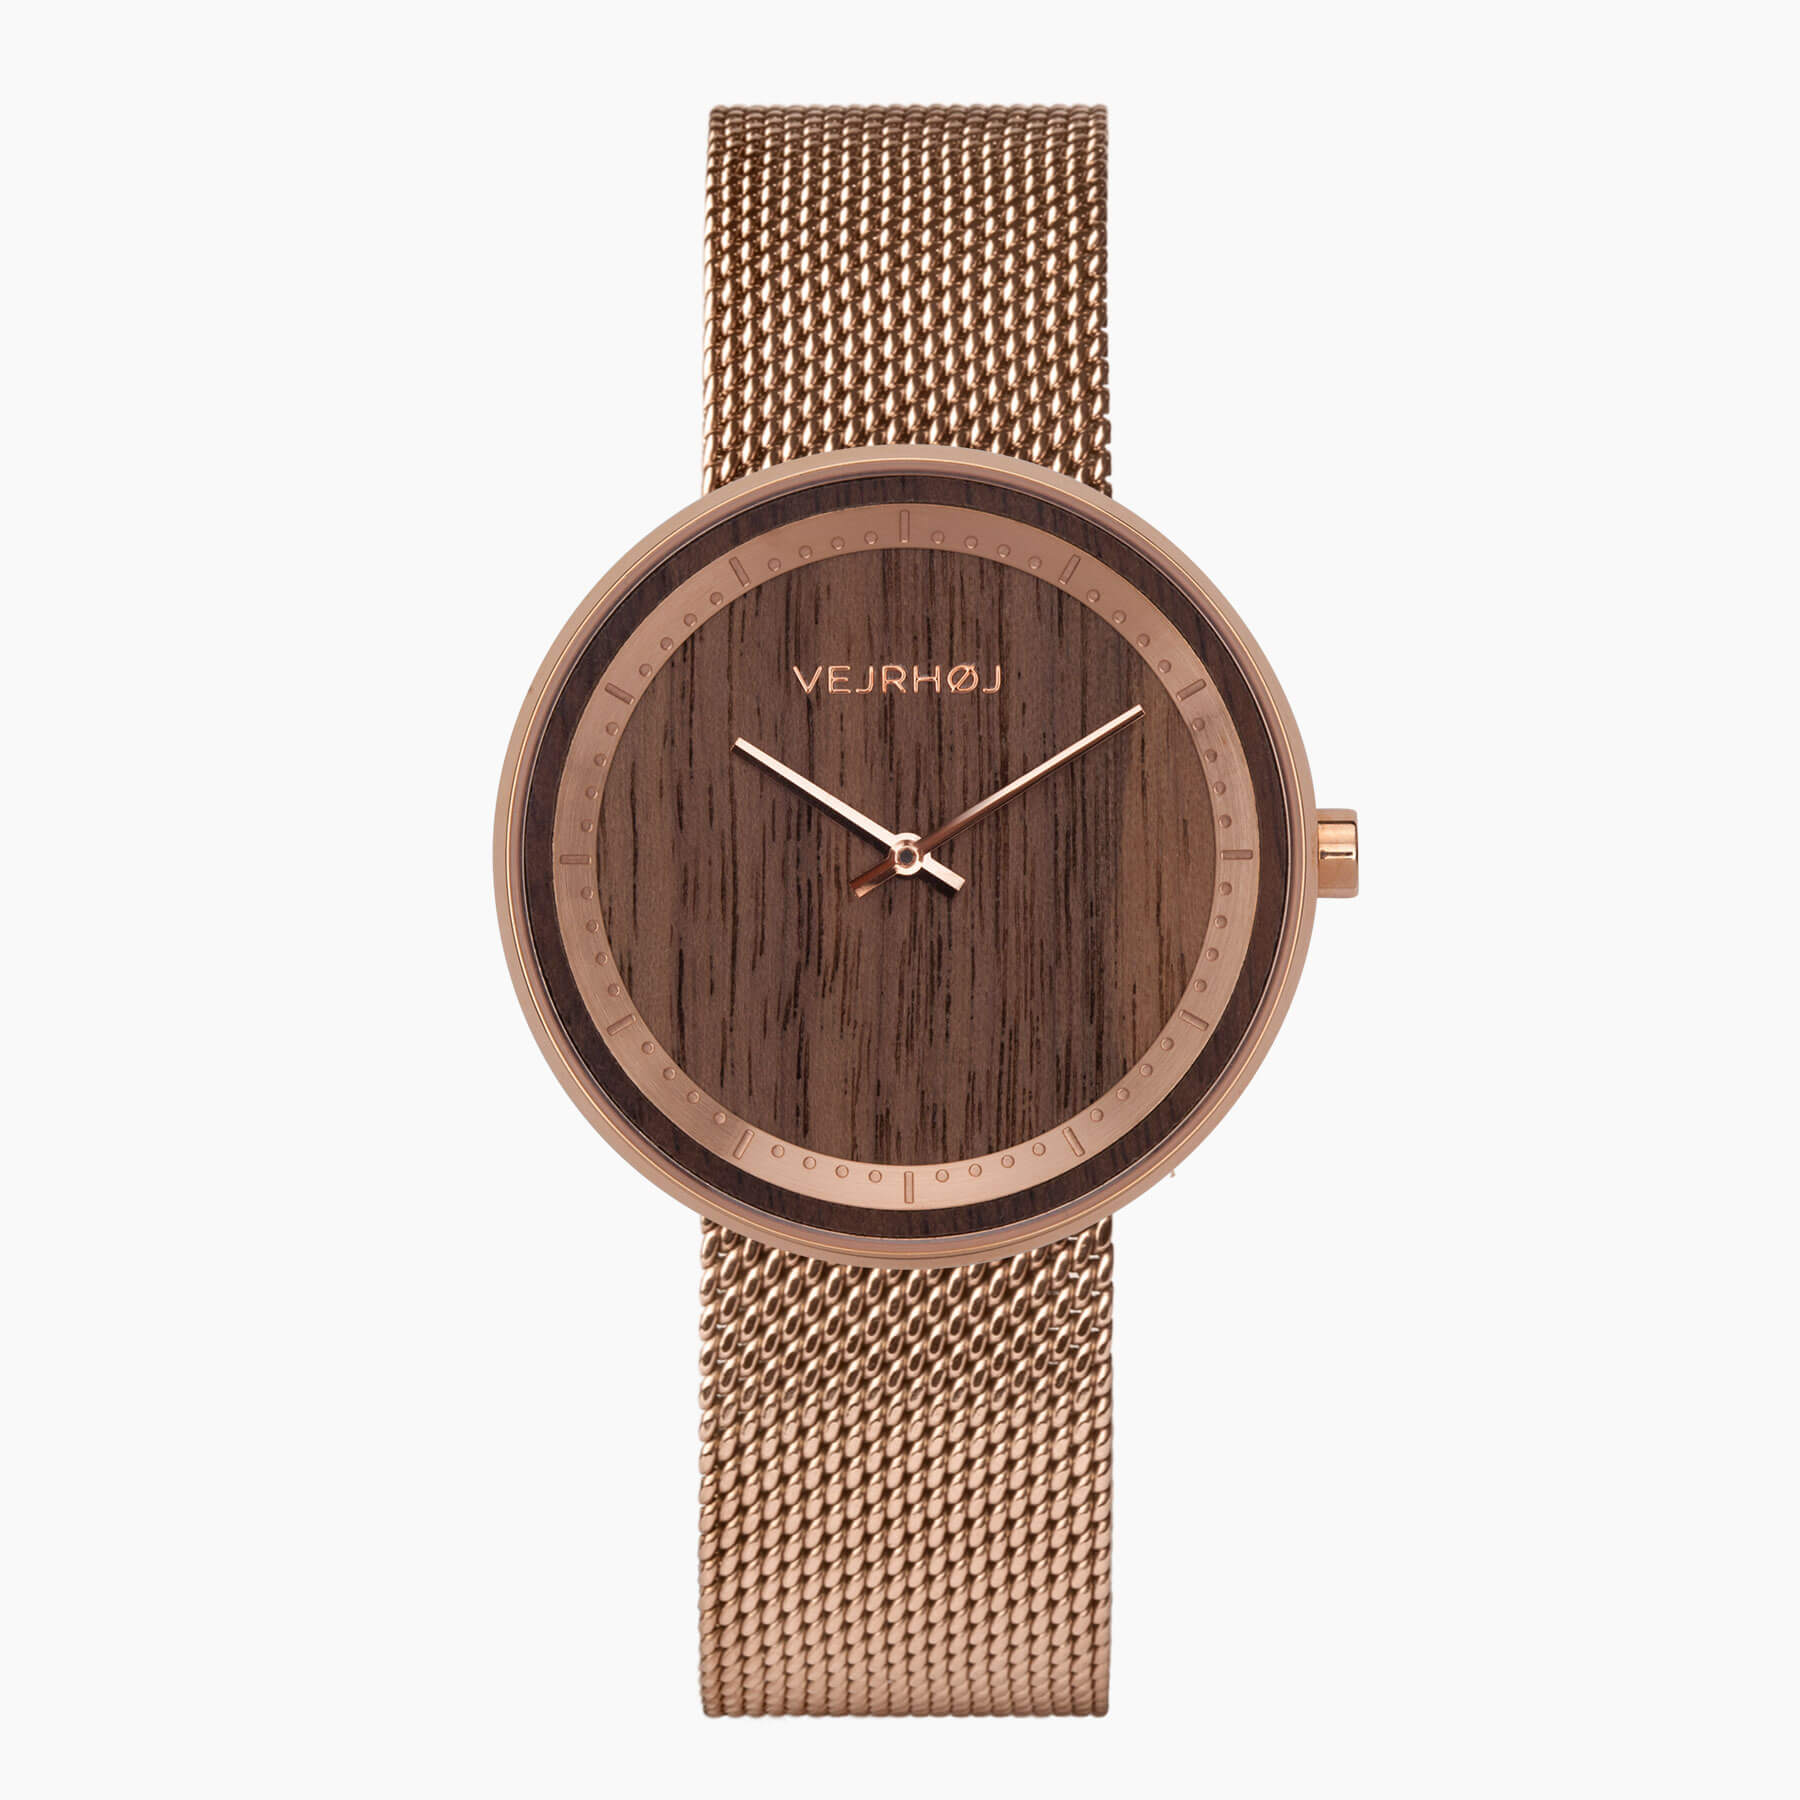 The ROSE  VEJRHØJ wood watches